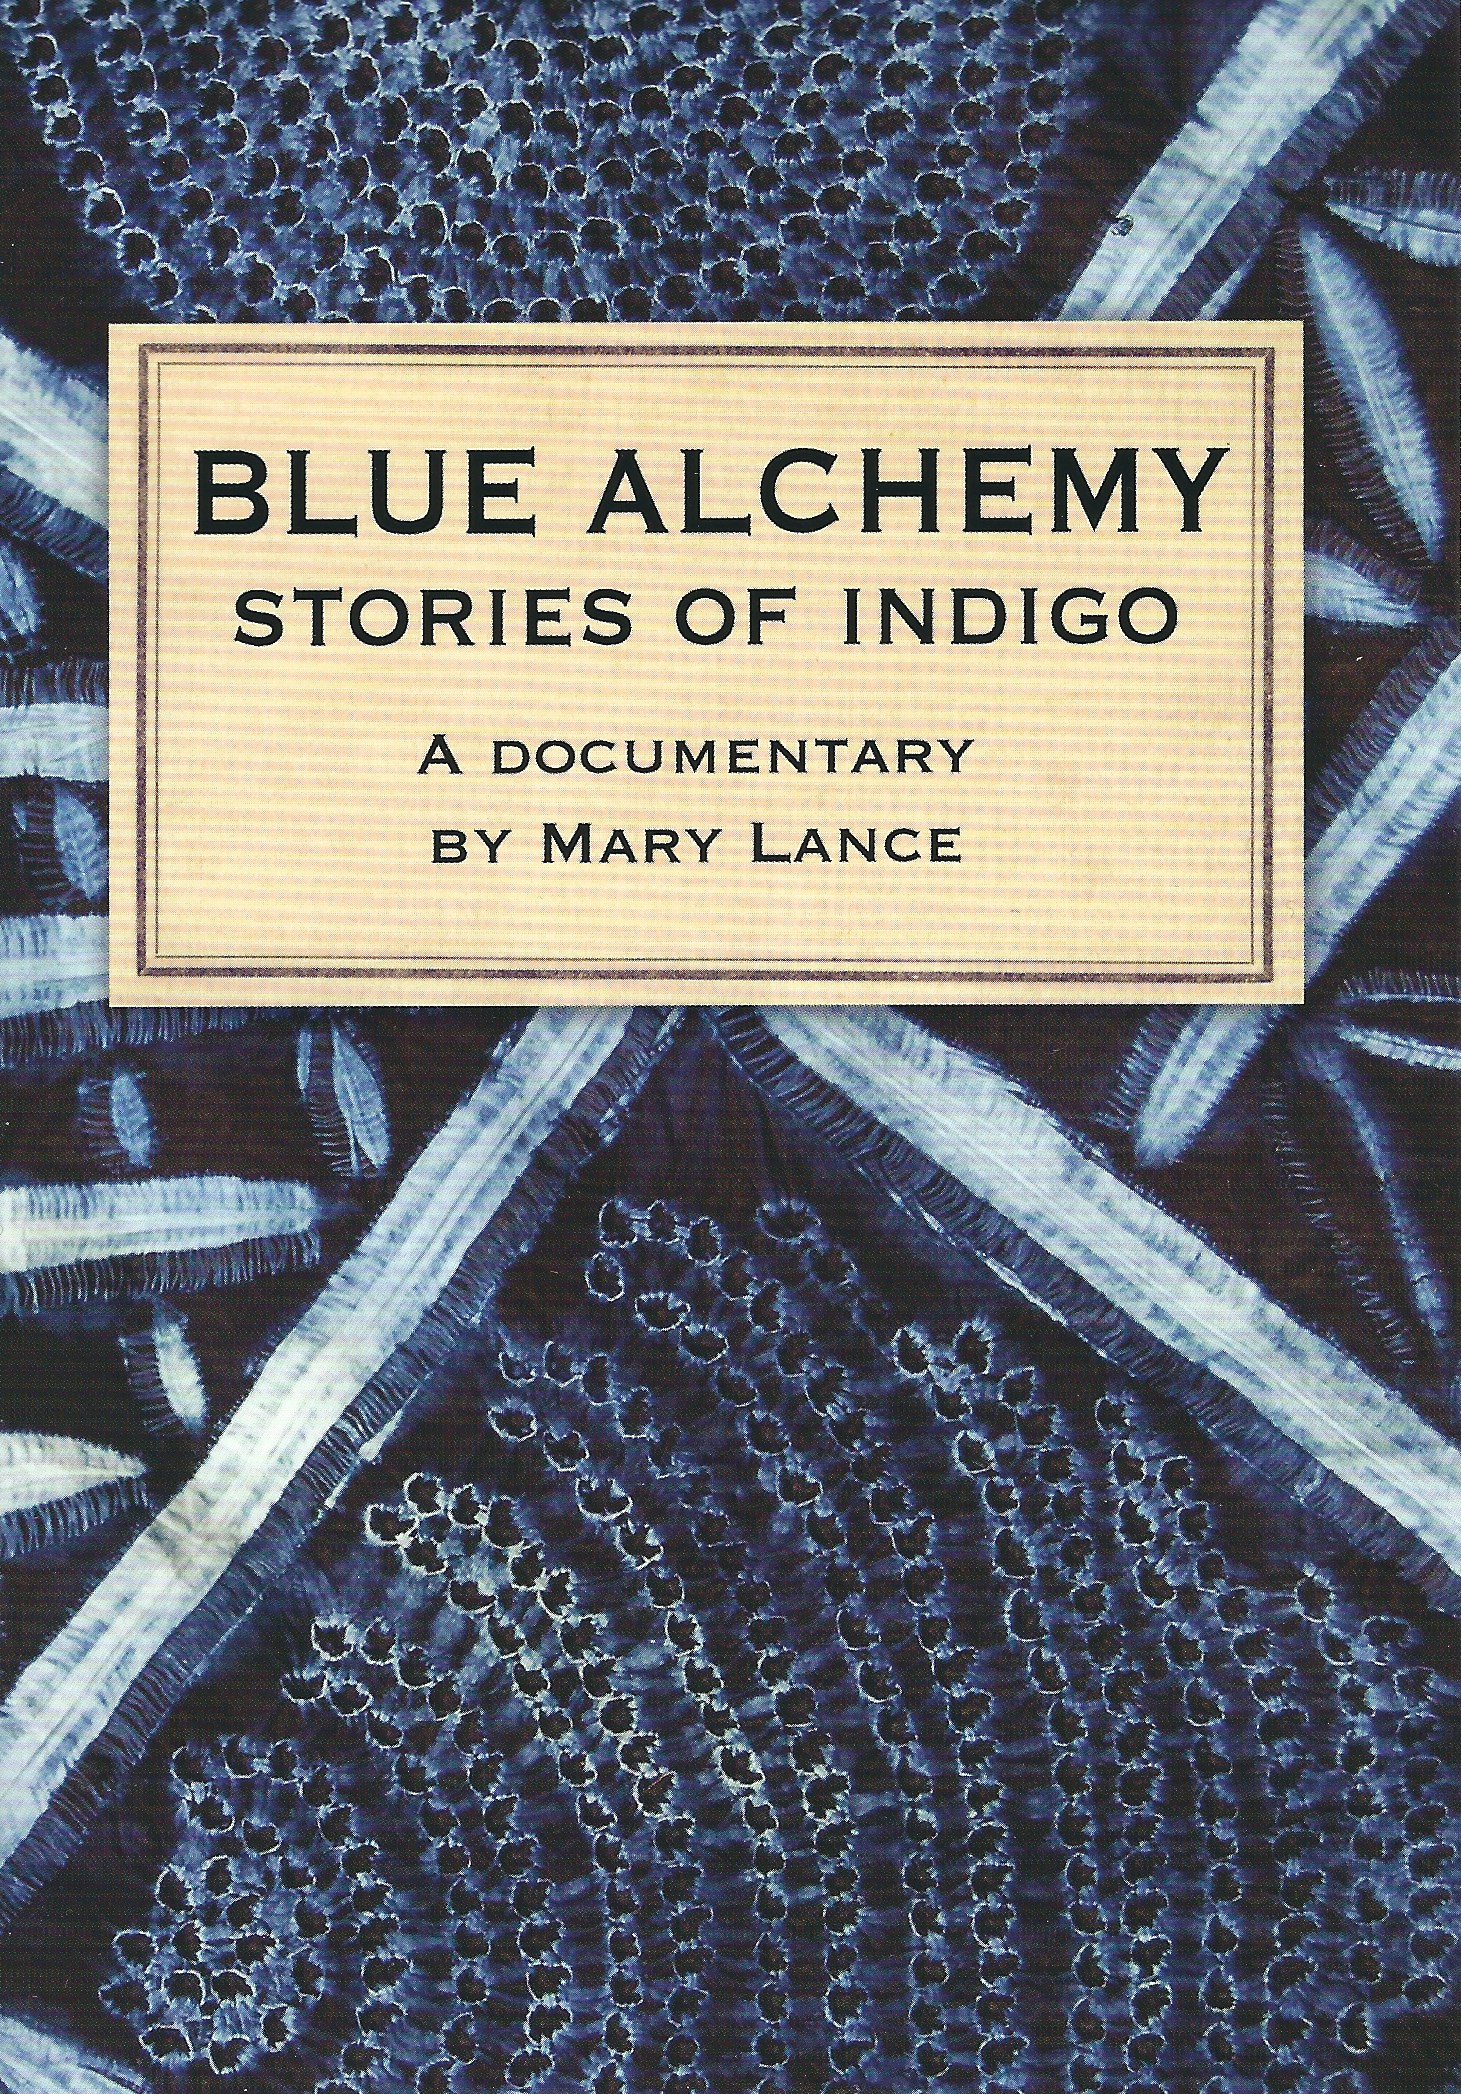 BLUE ALCHEMY: Stories of Indigo DVD